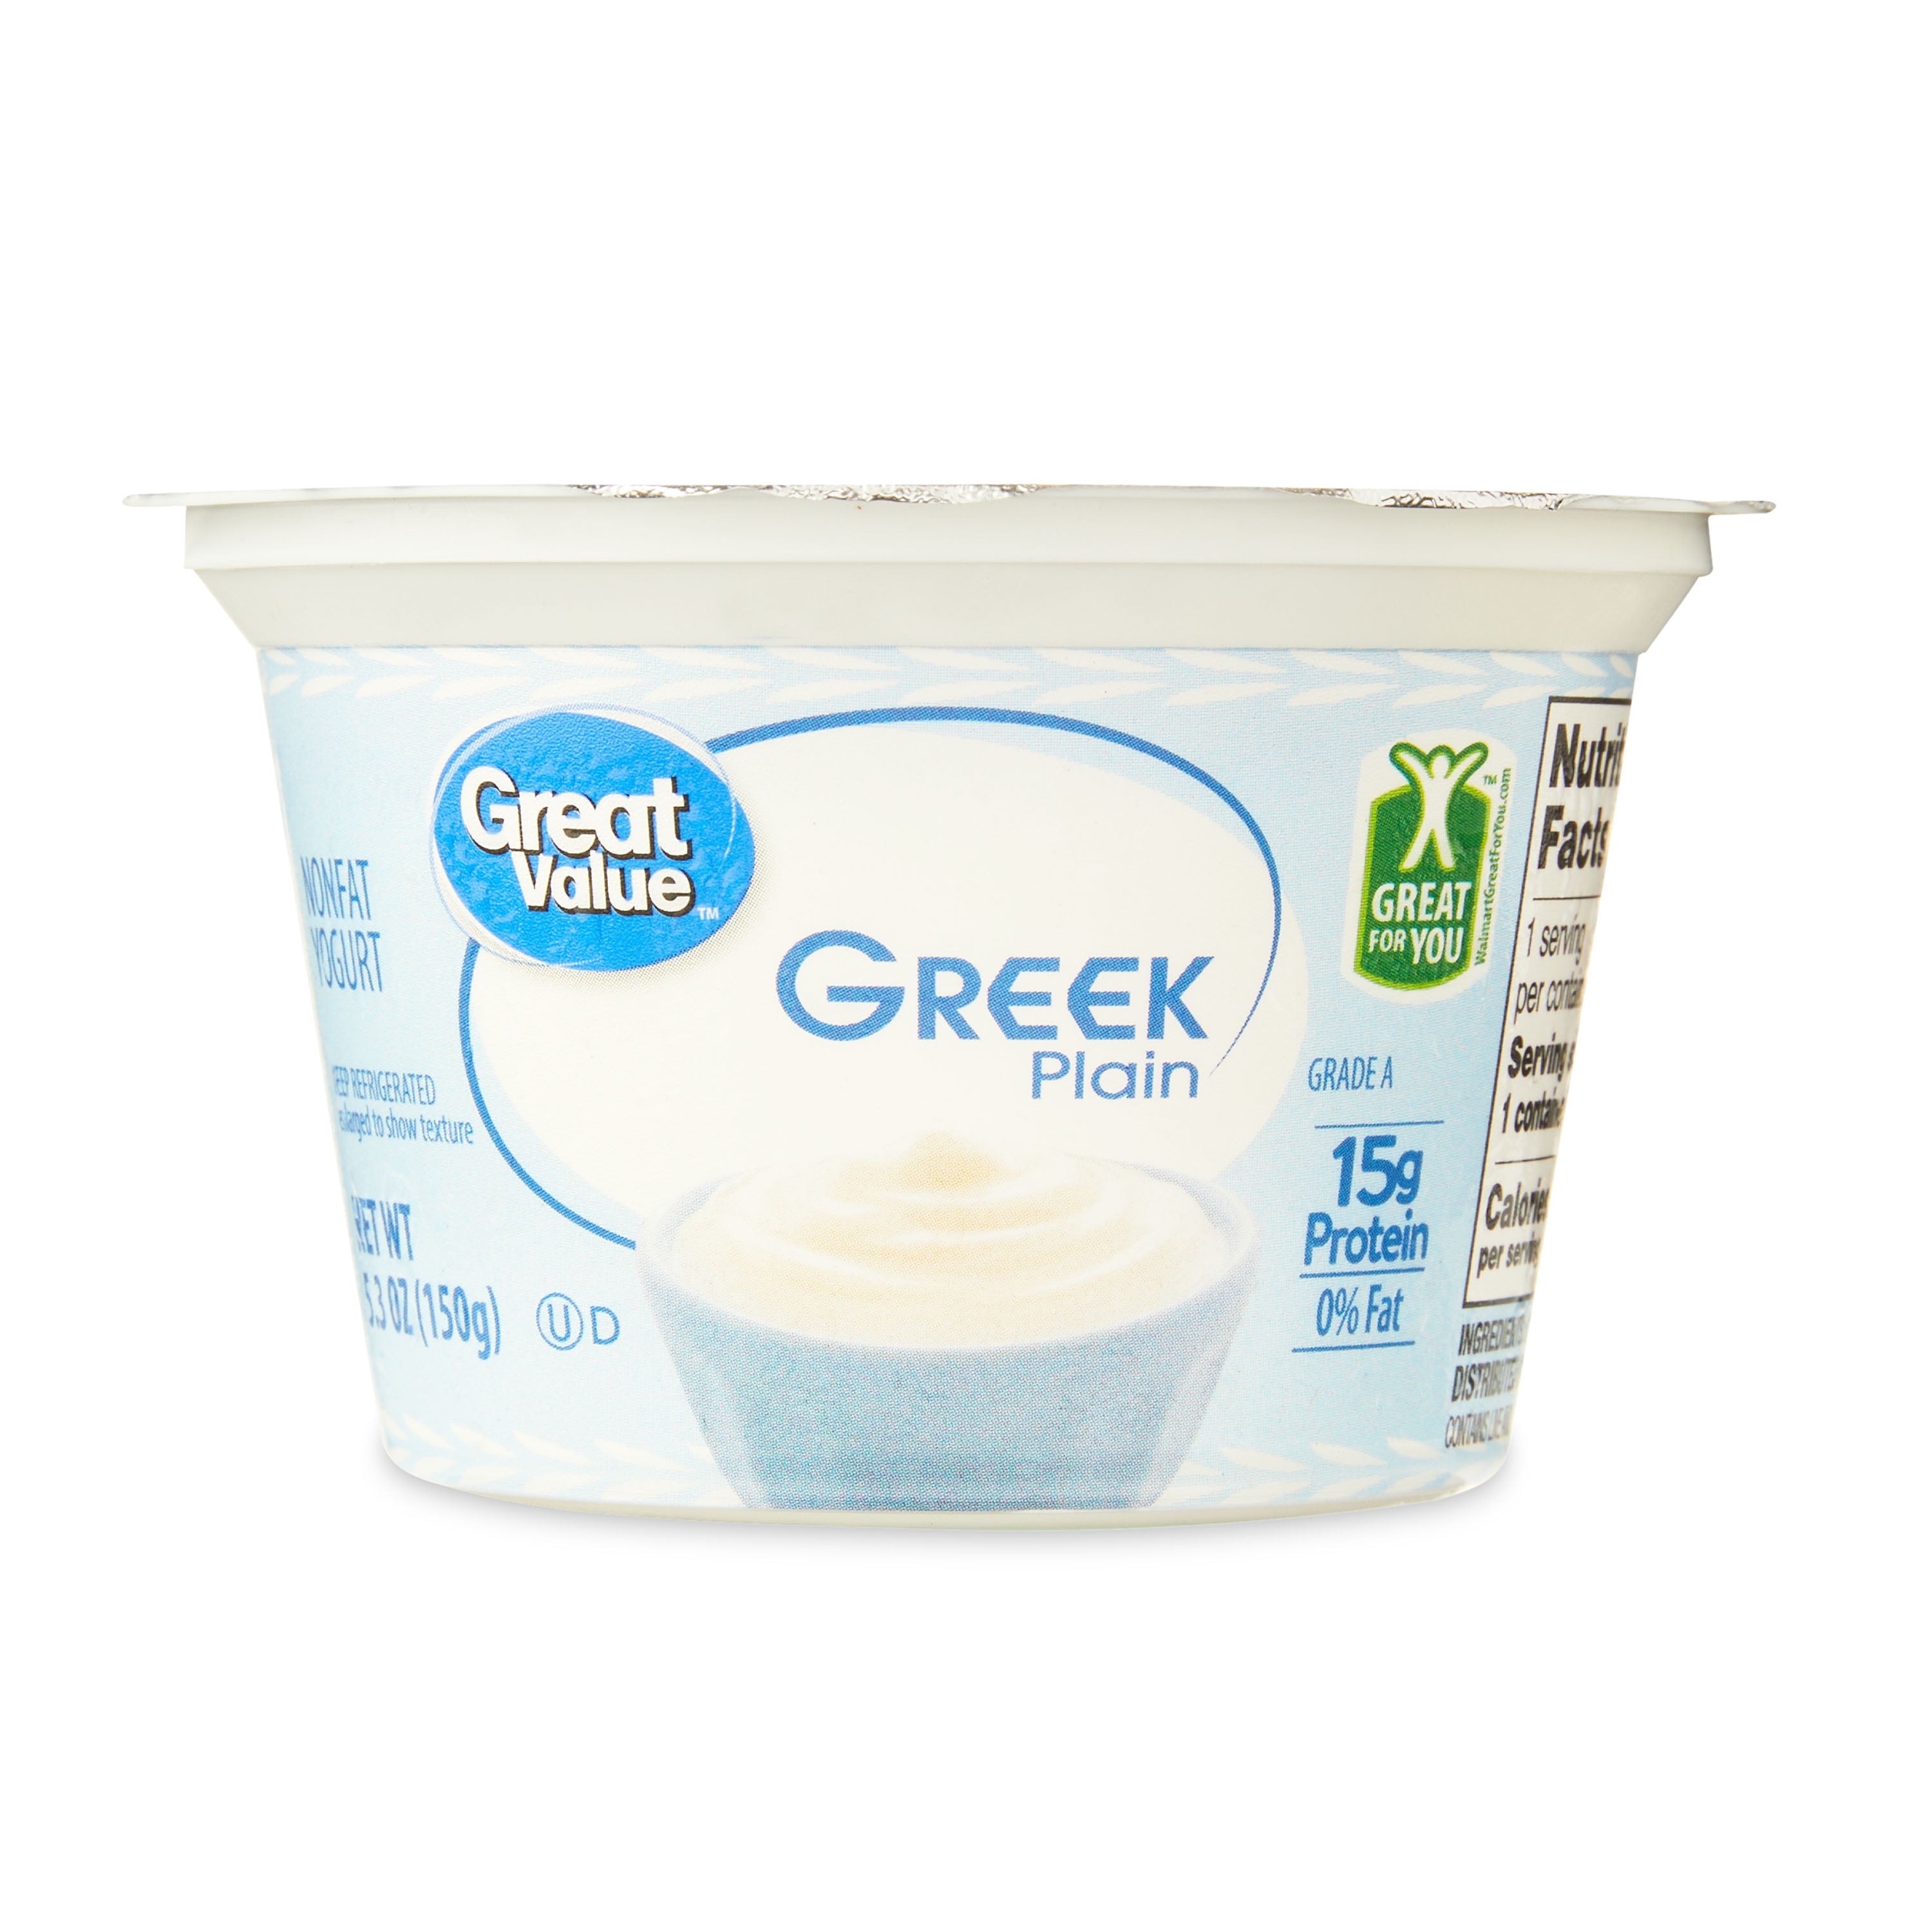 Great Value Greek Vanilla Nonfat Yogurt, 32 oz Tub (Plastic Container)